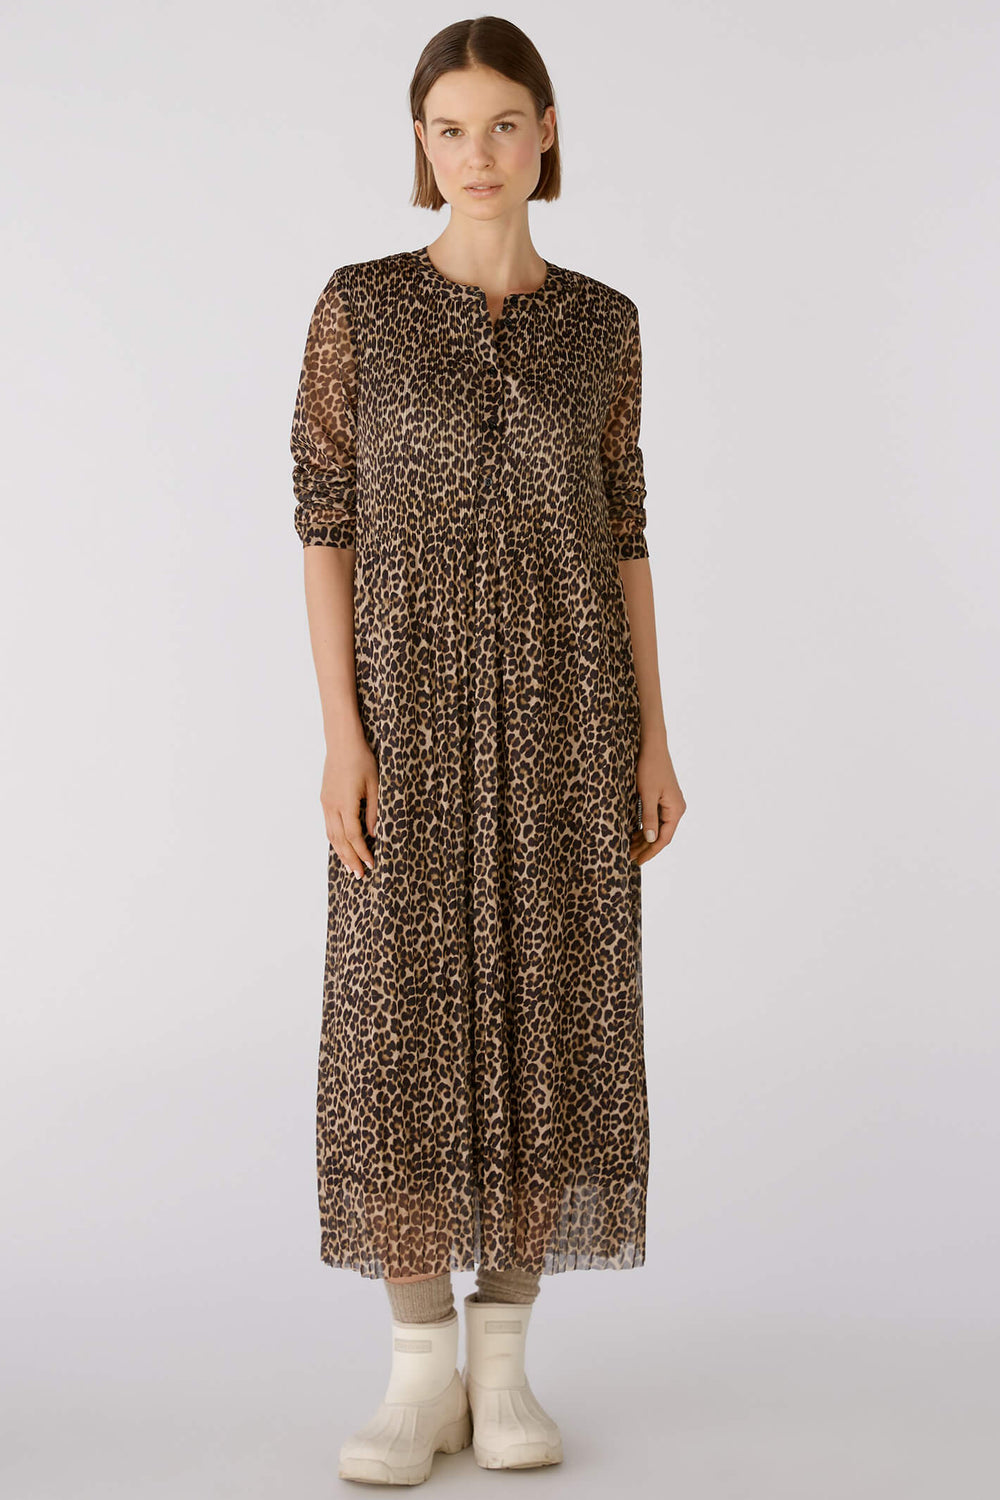 Oui 80154 Dark Camel Grey Animal Print Pleat Dress - Olivia Grace Fashion